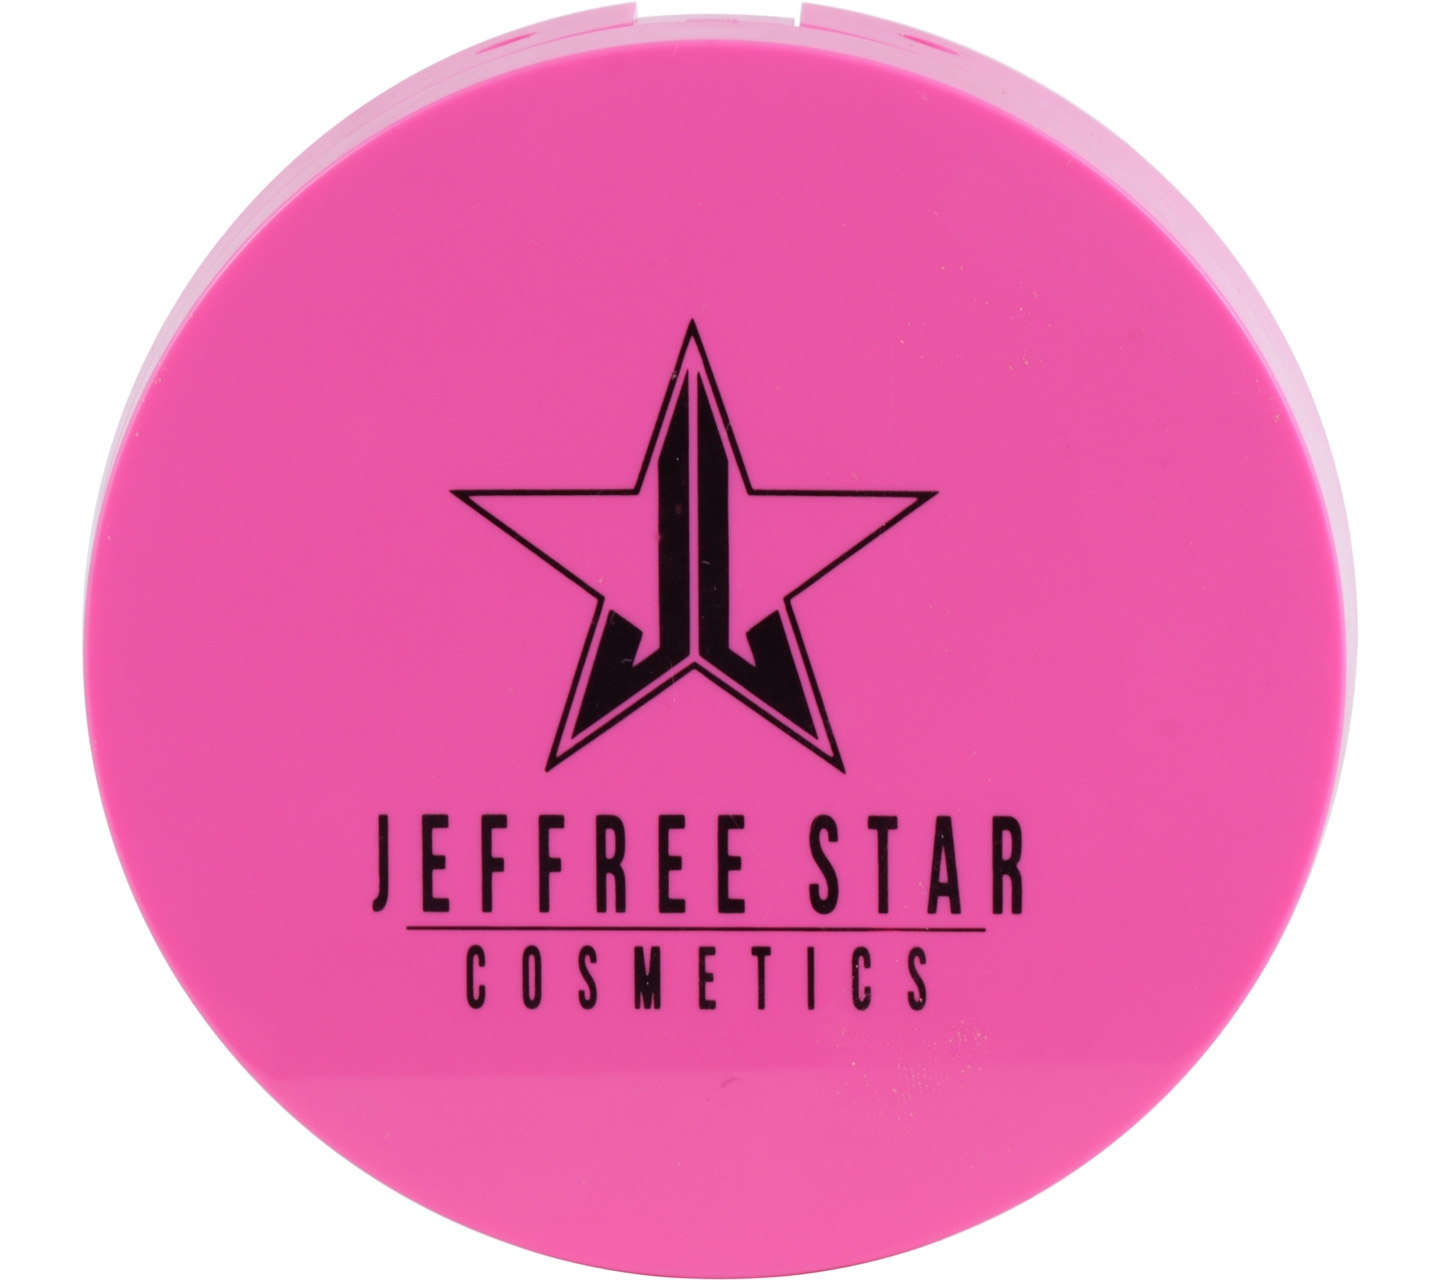 Jeffree Star Peach Goddess Skin Frost Highlighting Powder Faces